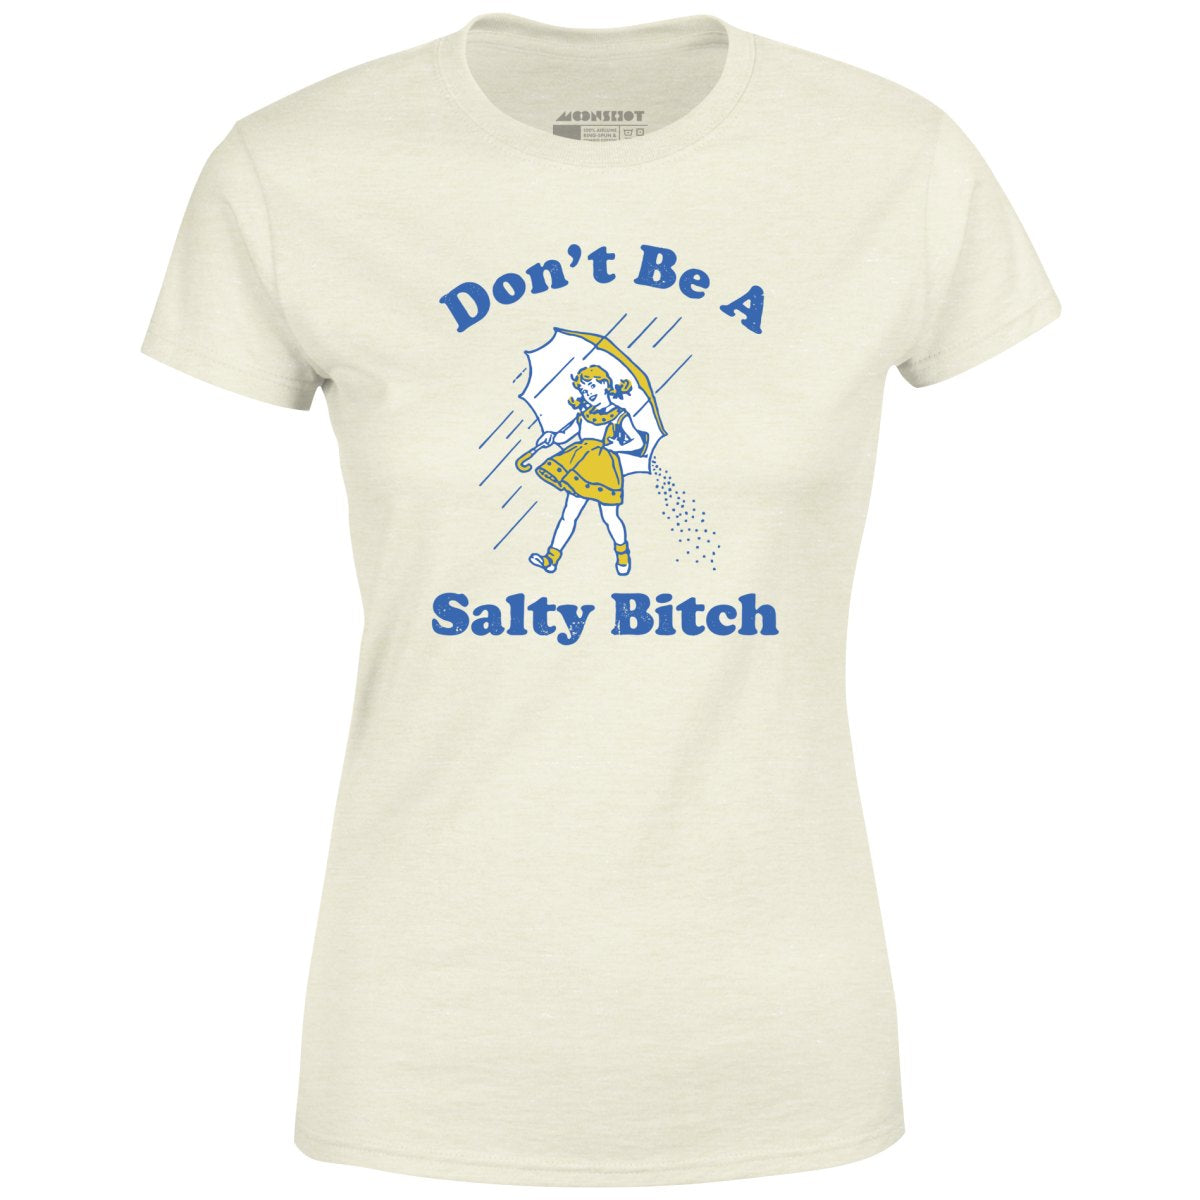 Don't Be a Salty Bitch - Women's T-Shirt